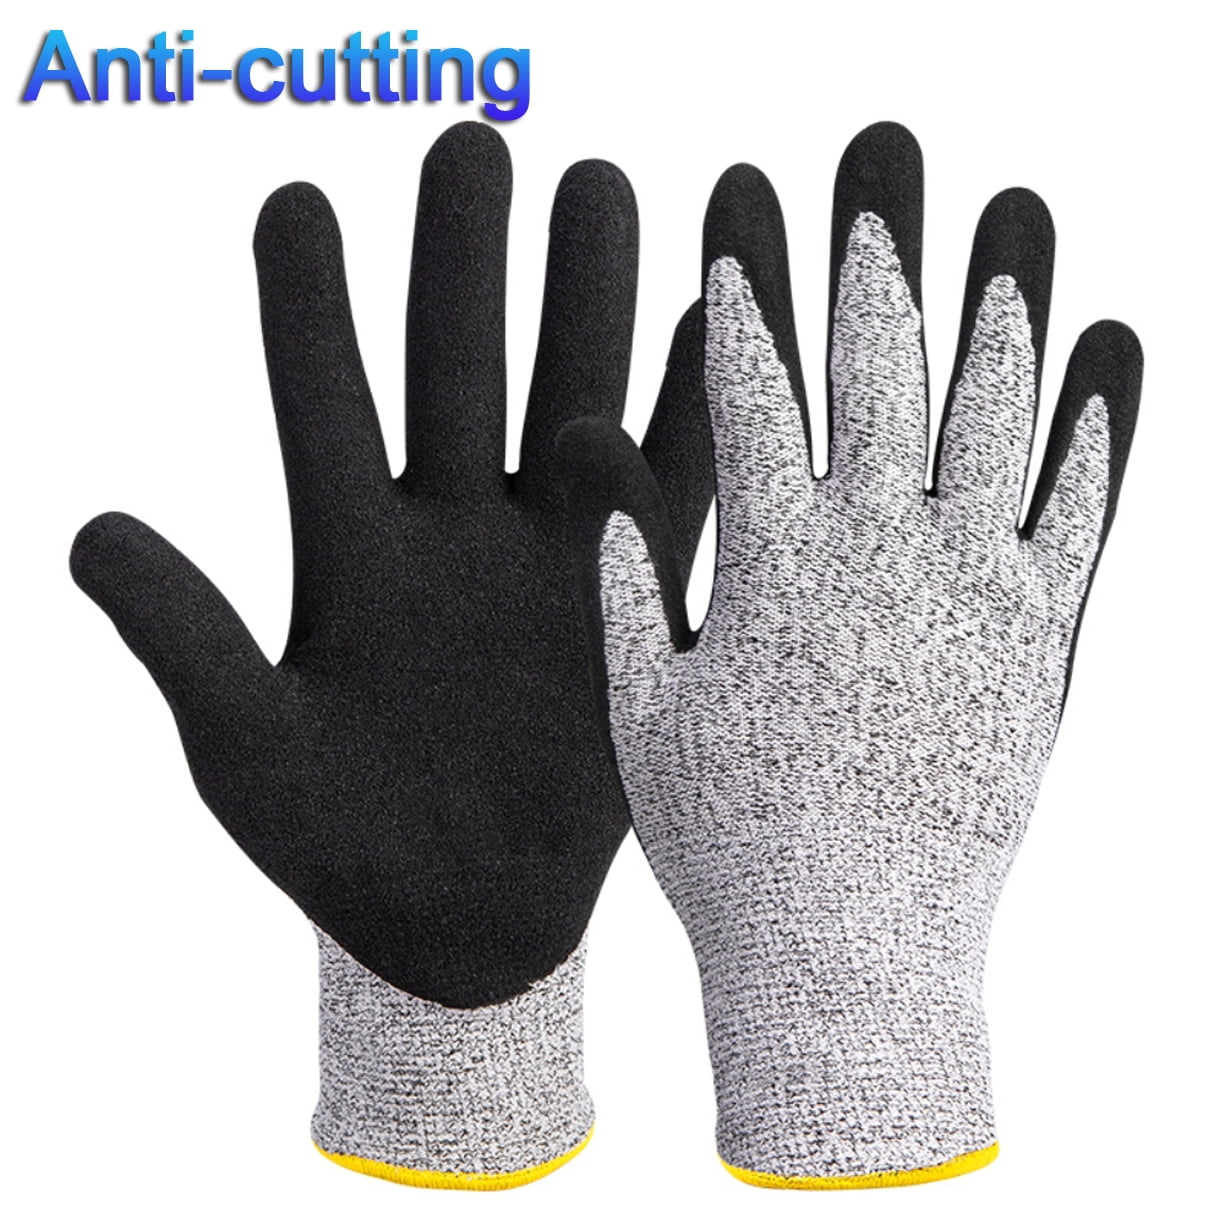 URMAGIC Universal Nitrile-coated Anti-cutting Work Gloves for